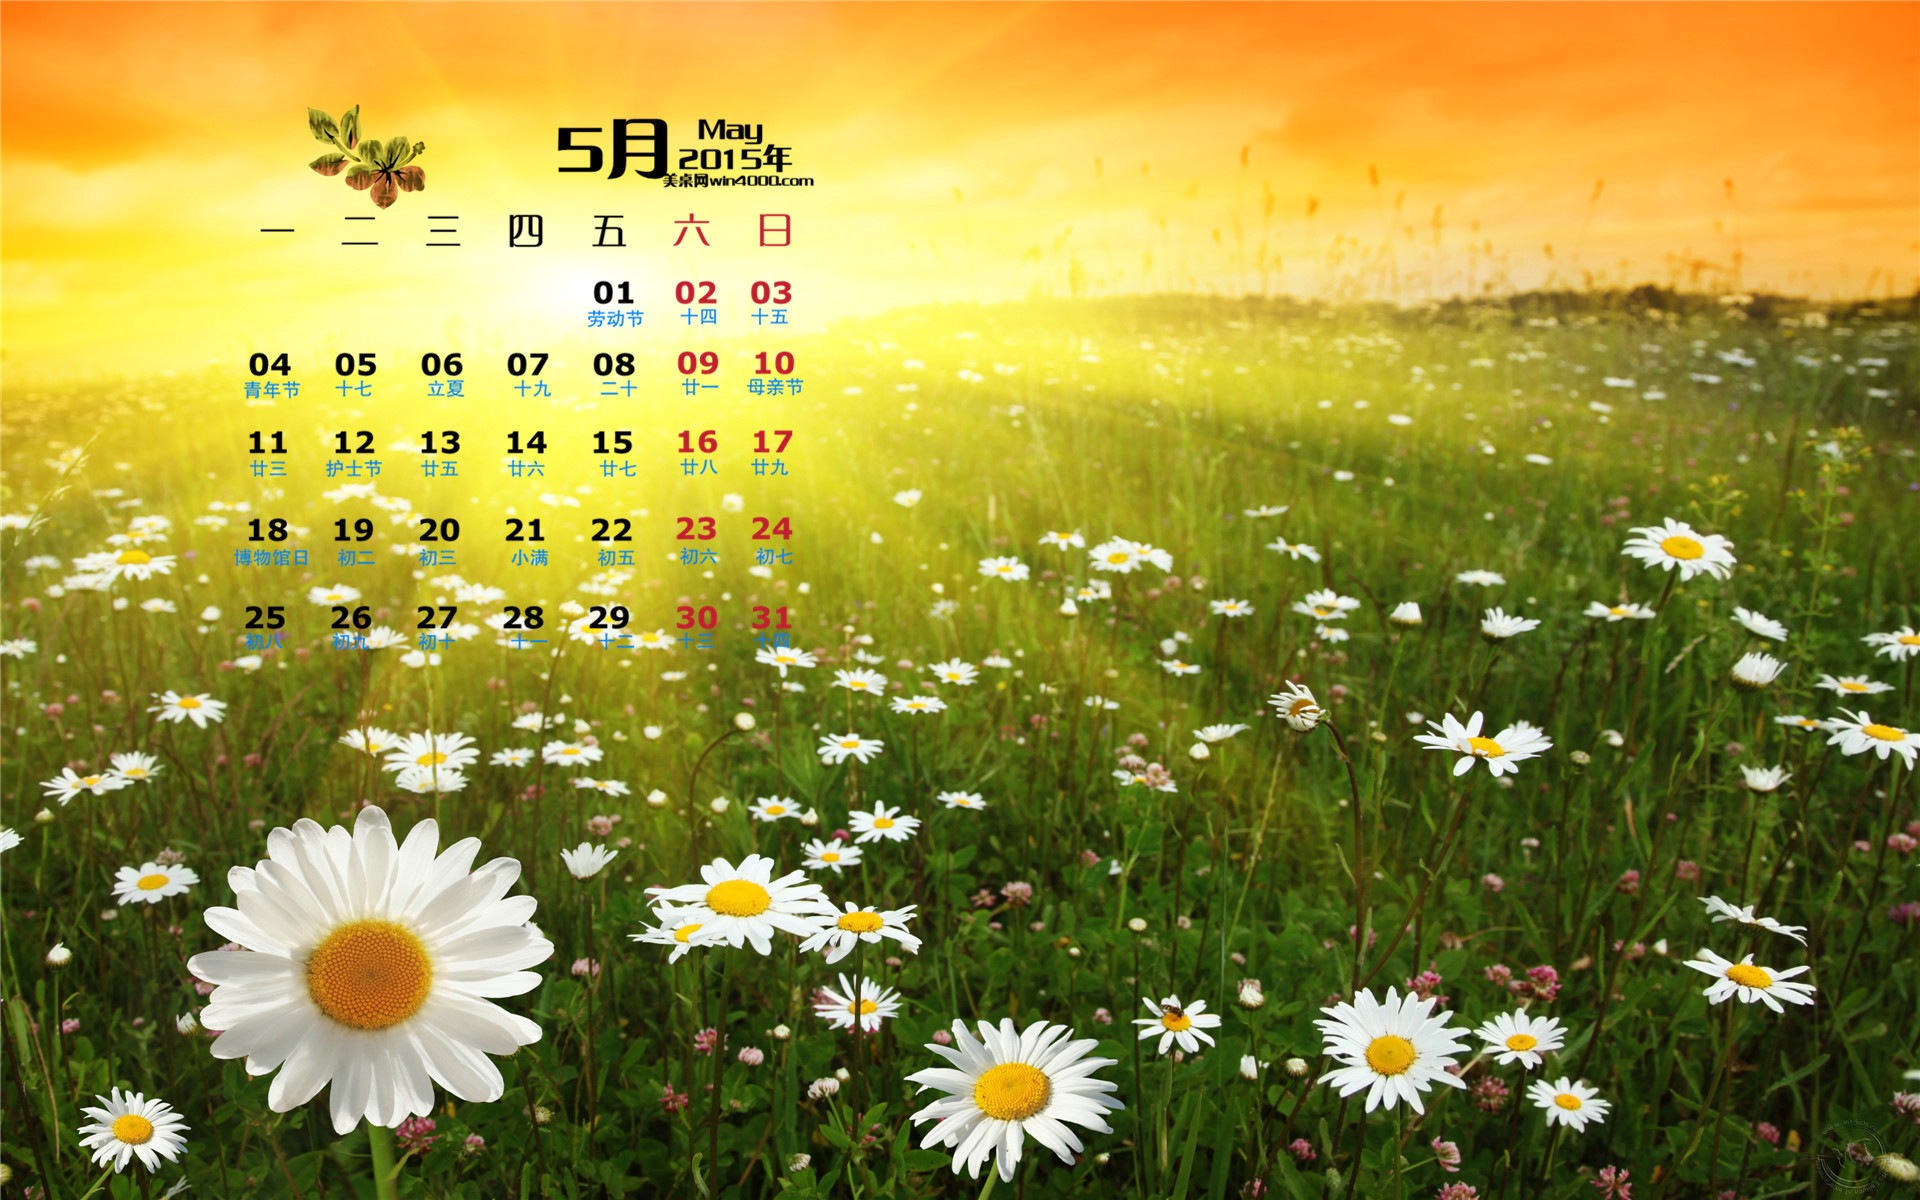 Mai 2015 calendar fond d'écran (1) #15 - 1920x1200